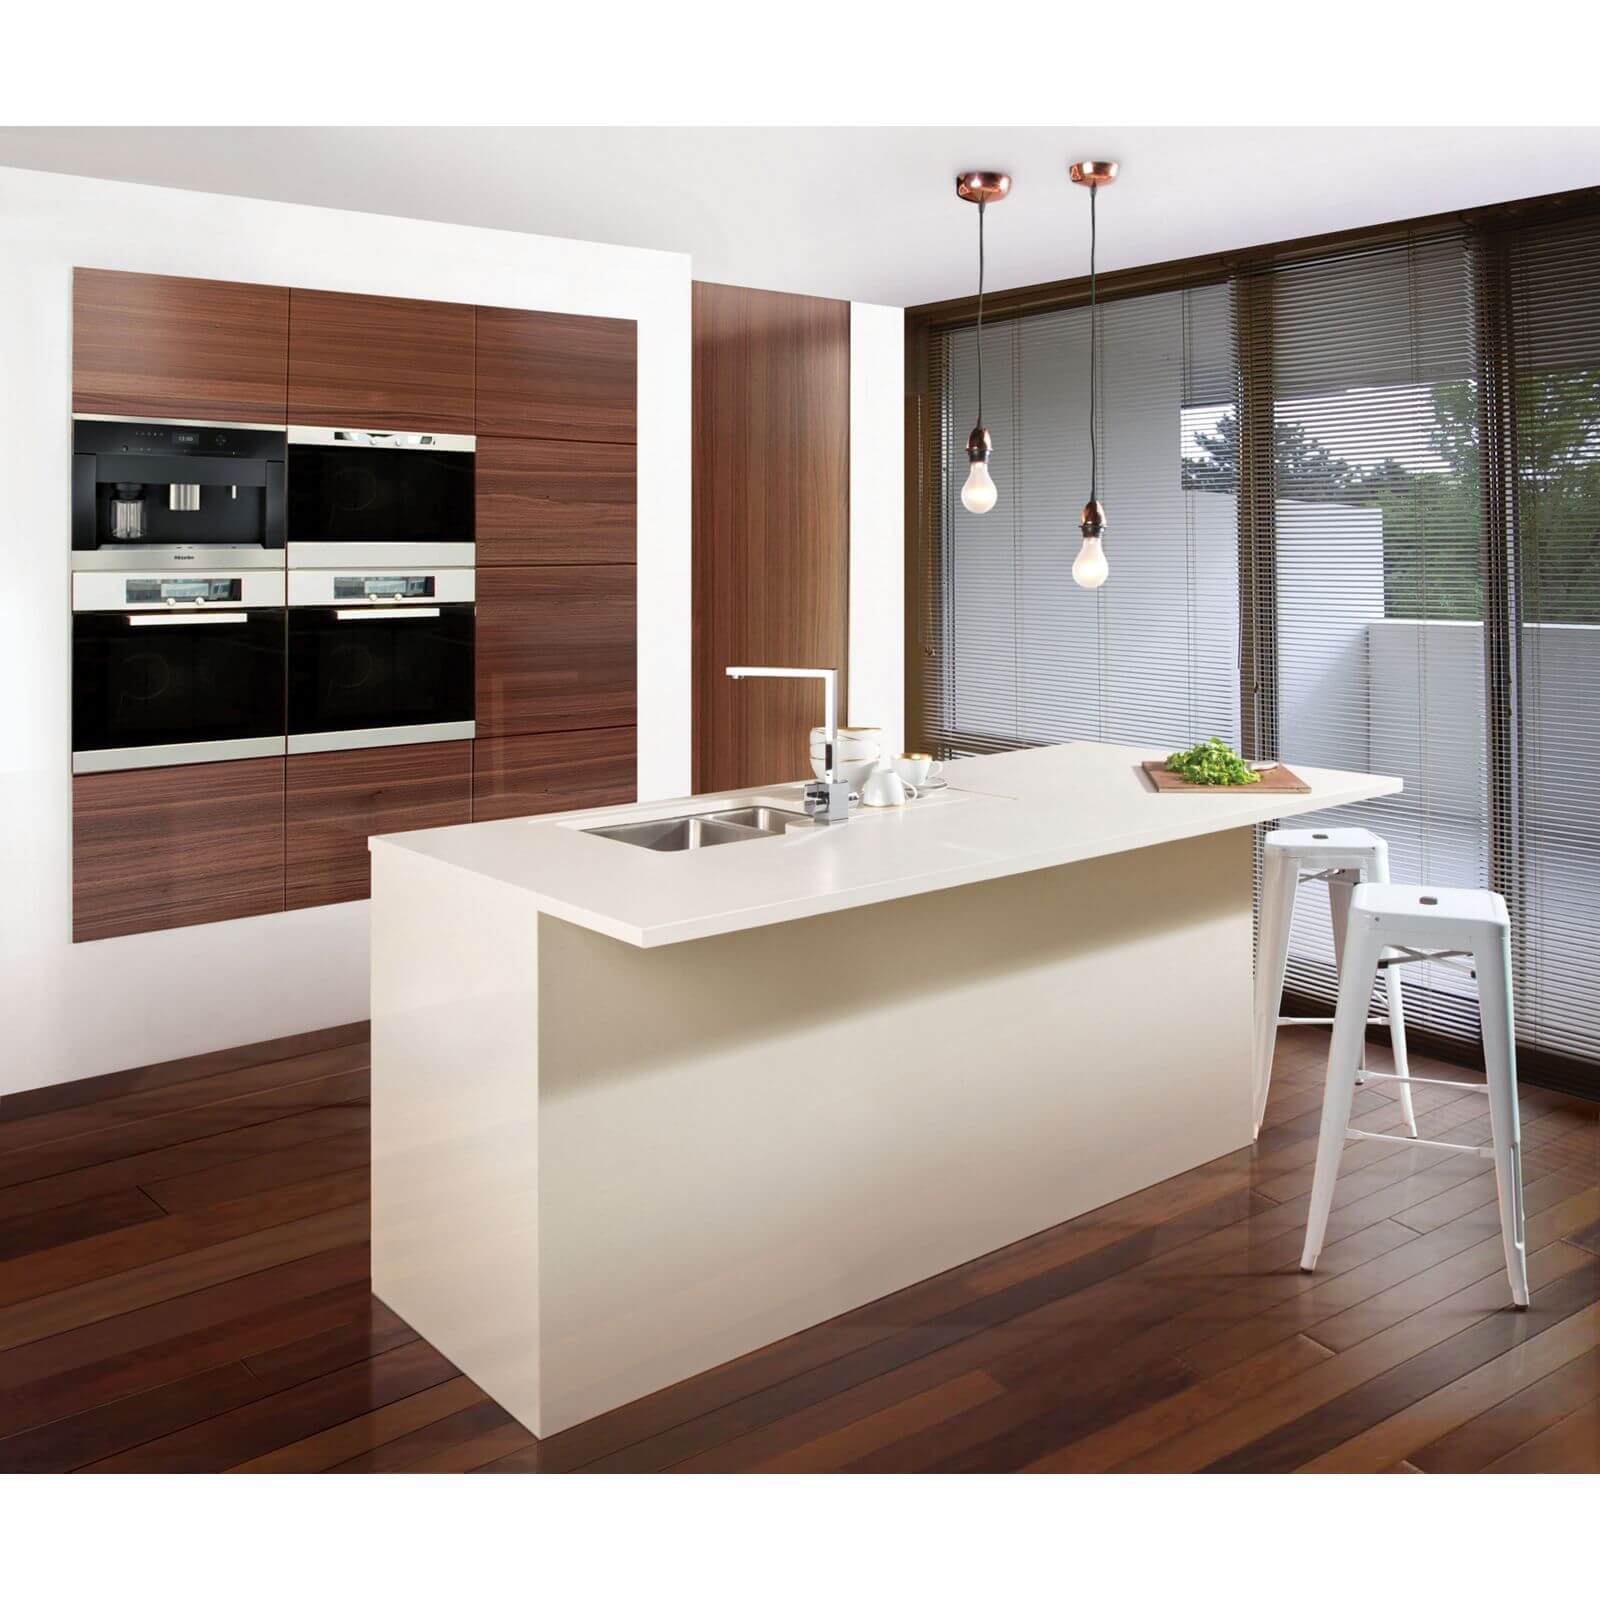 Maia Fossil Kitchen Sink Worktop - Universal Bowl - 1800 x 600 x 42mm